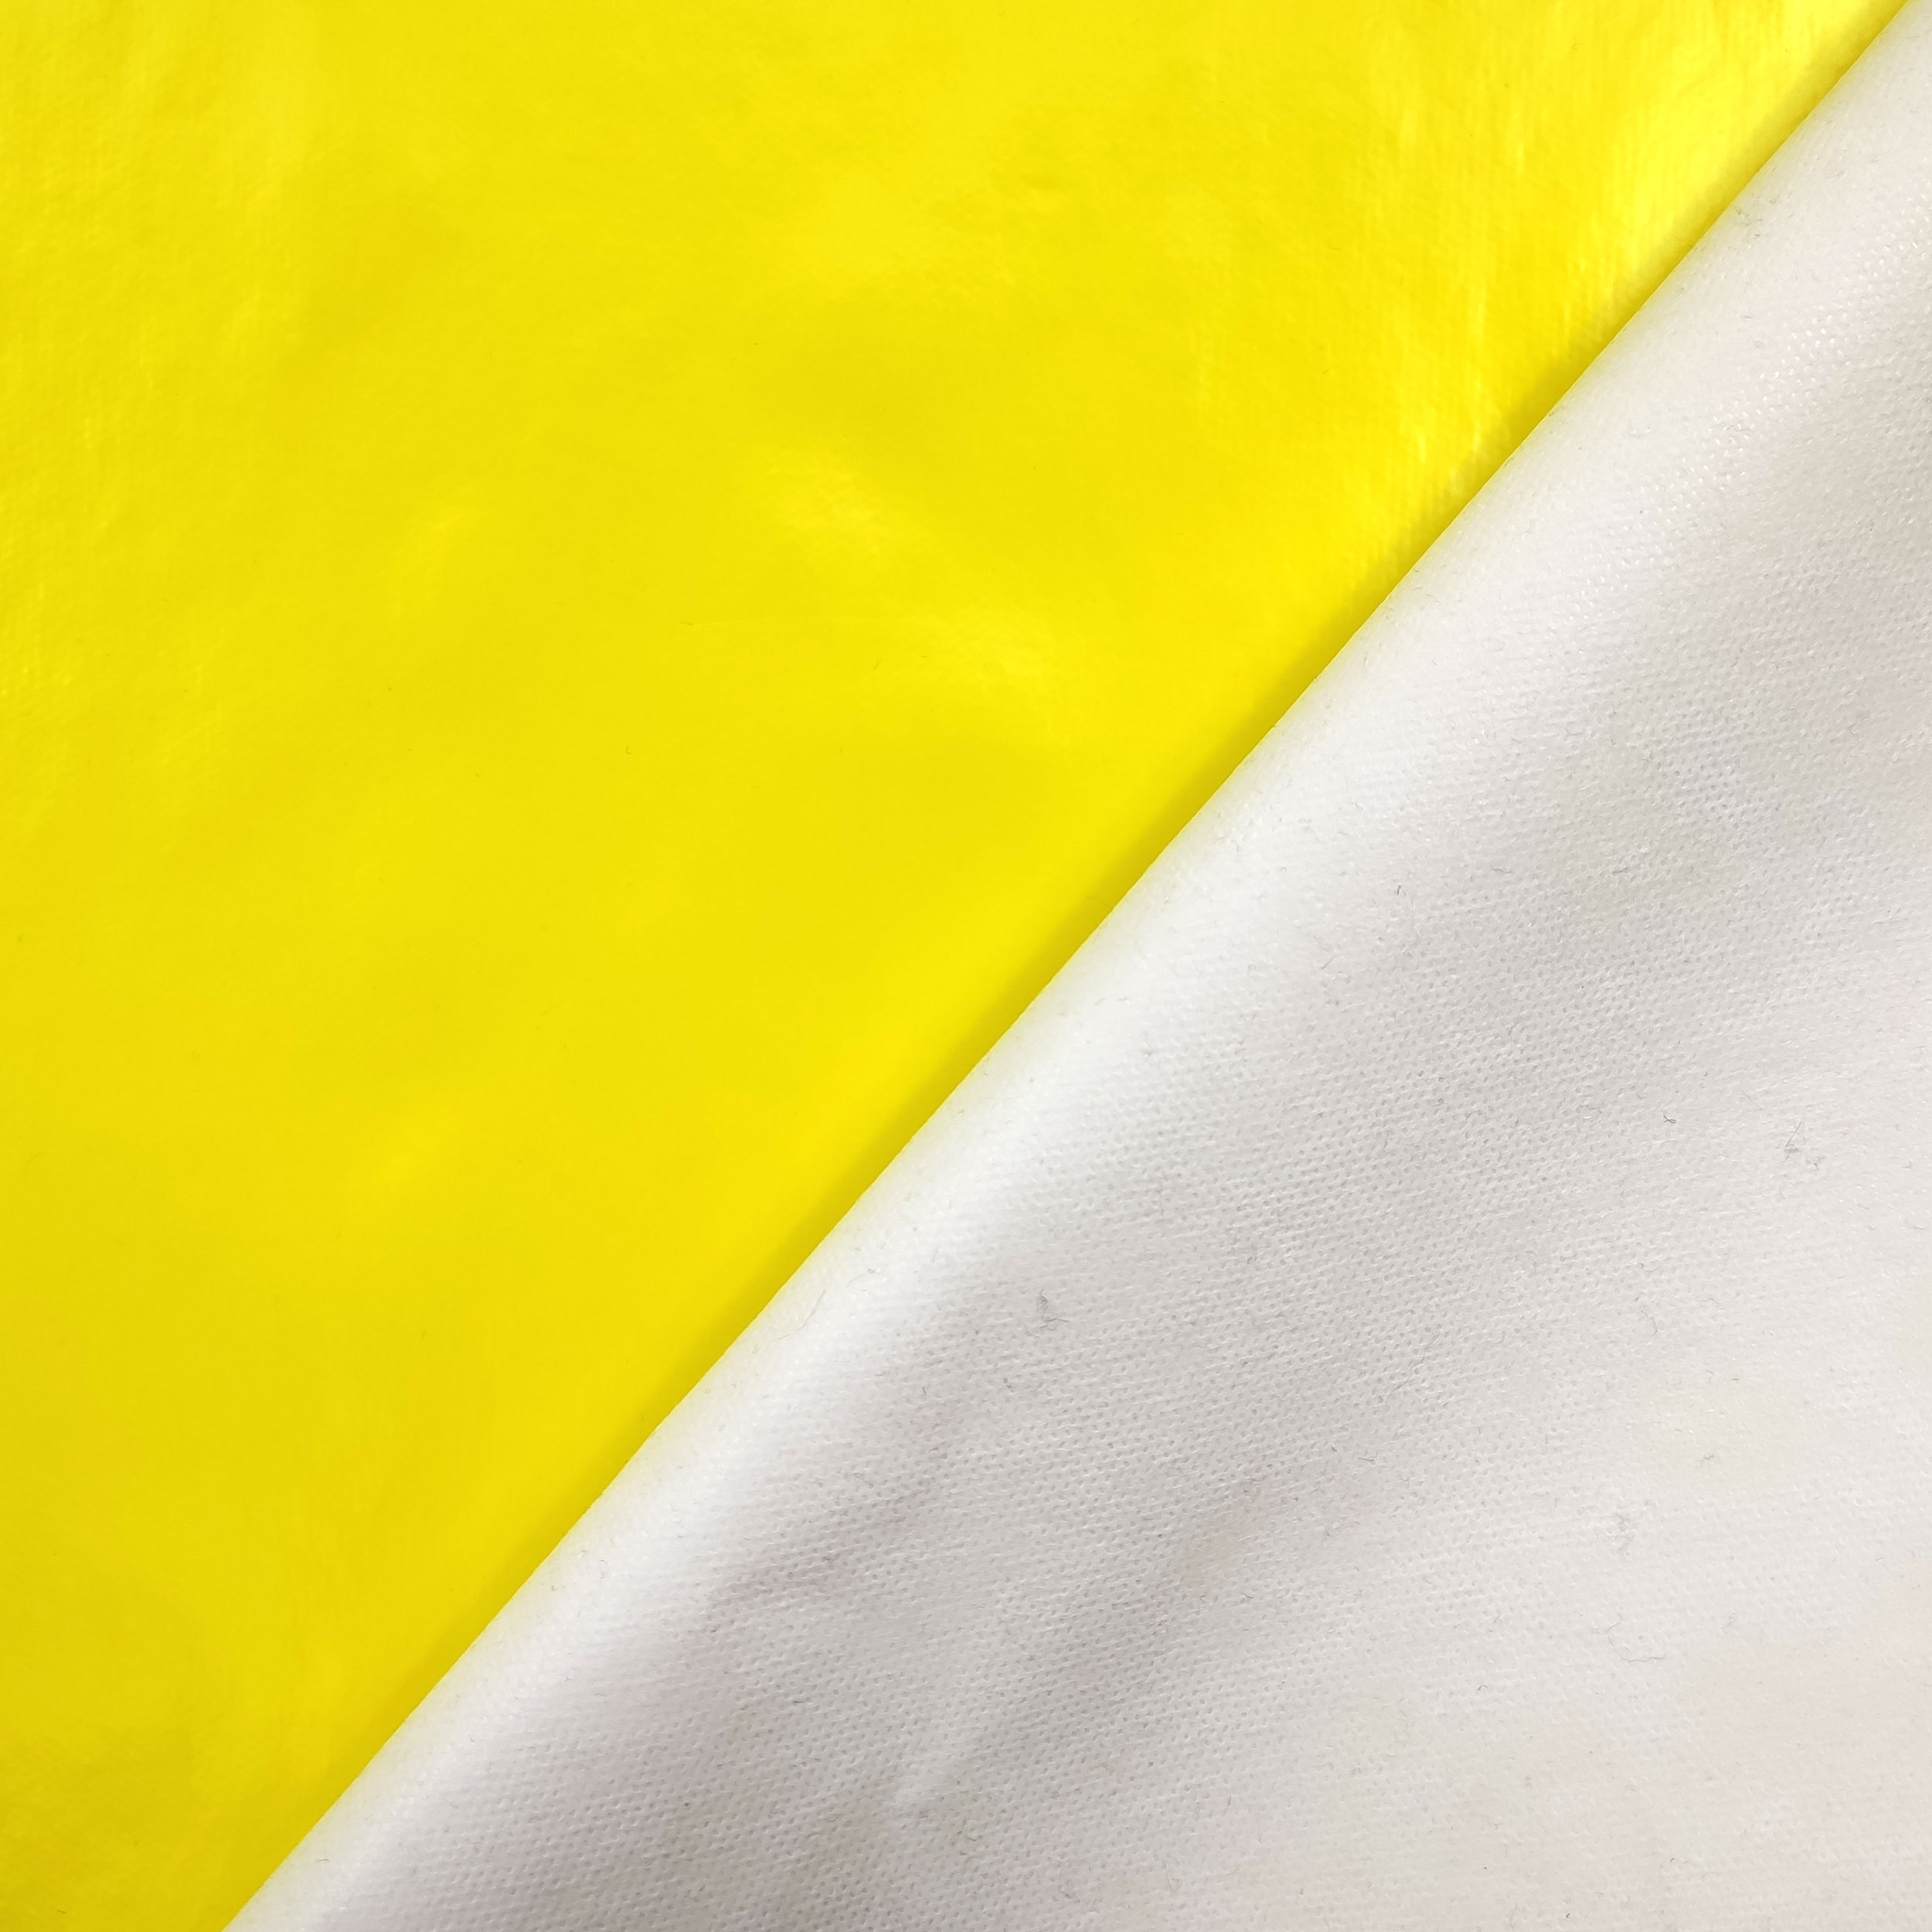 tessuto-per-tovaglie-accoppiato-giallo